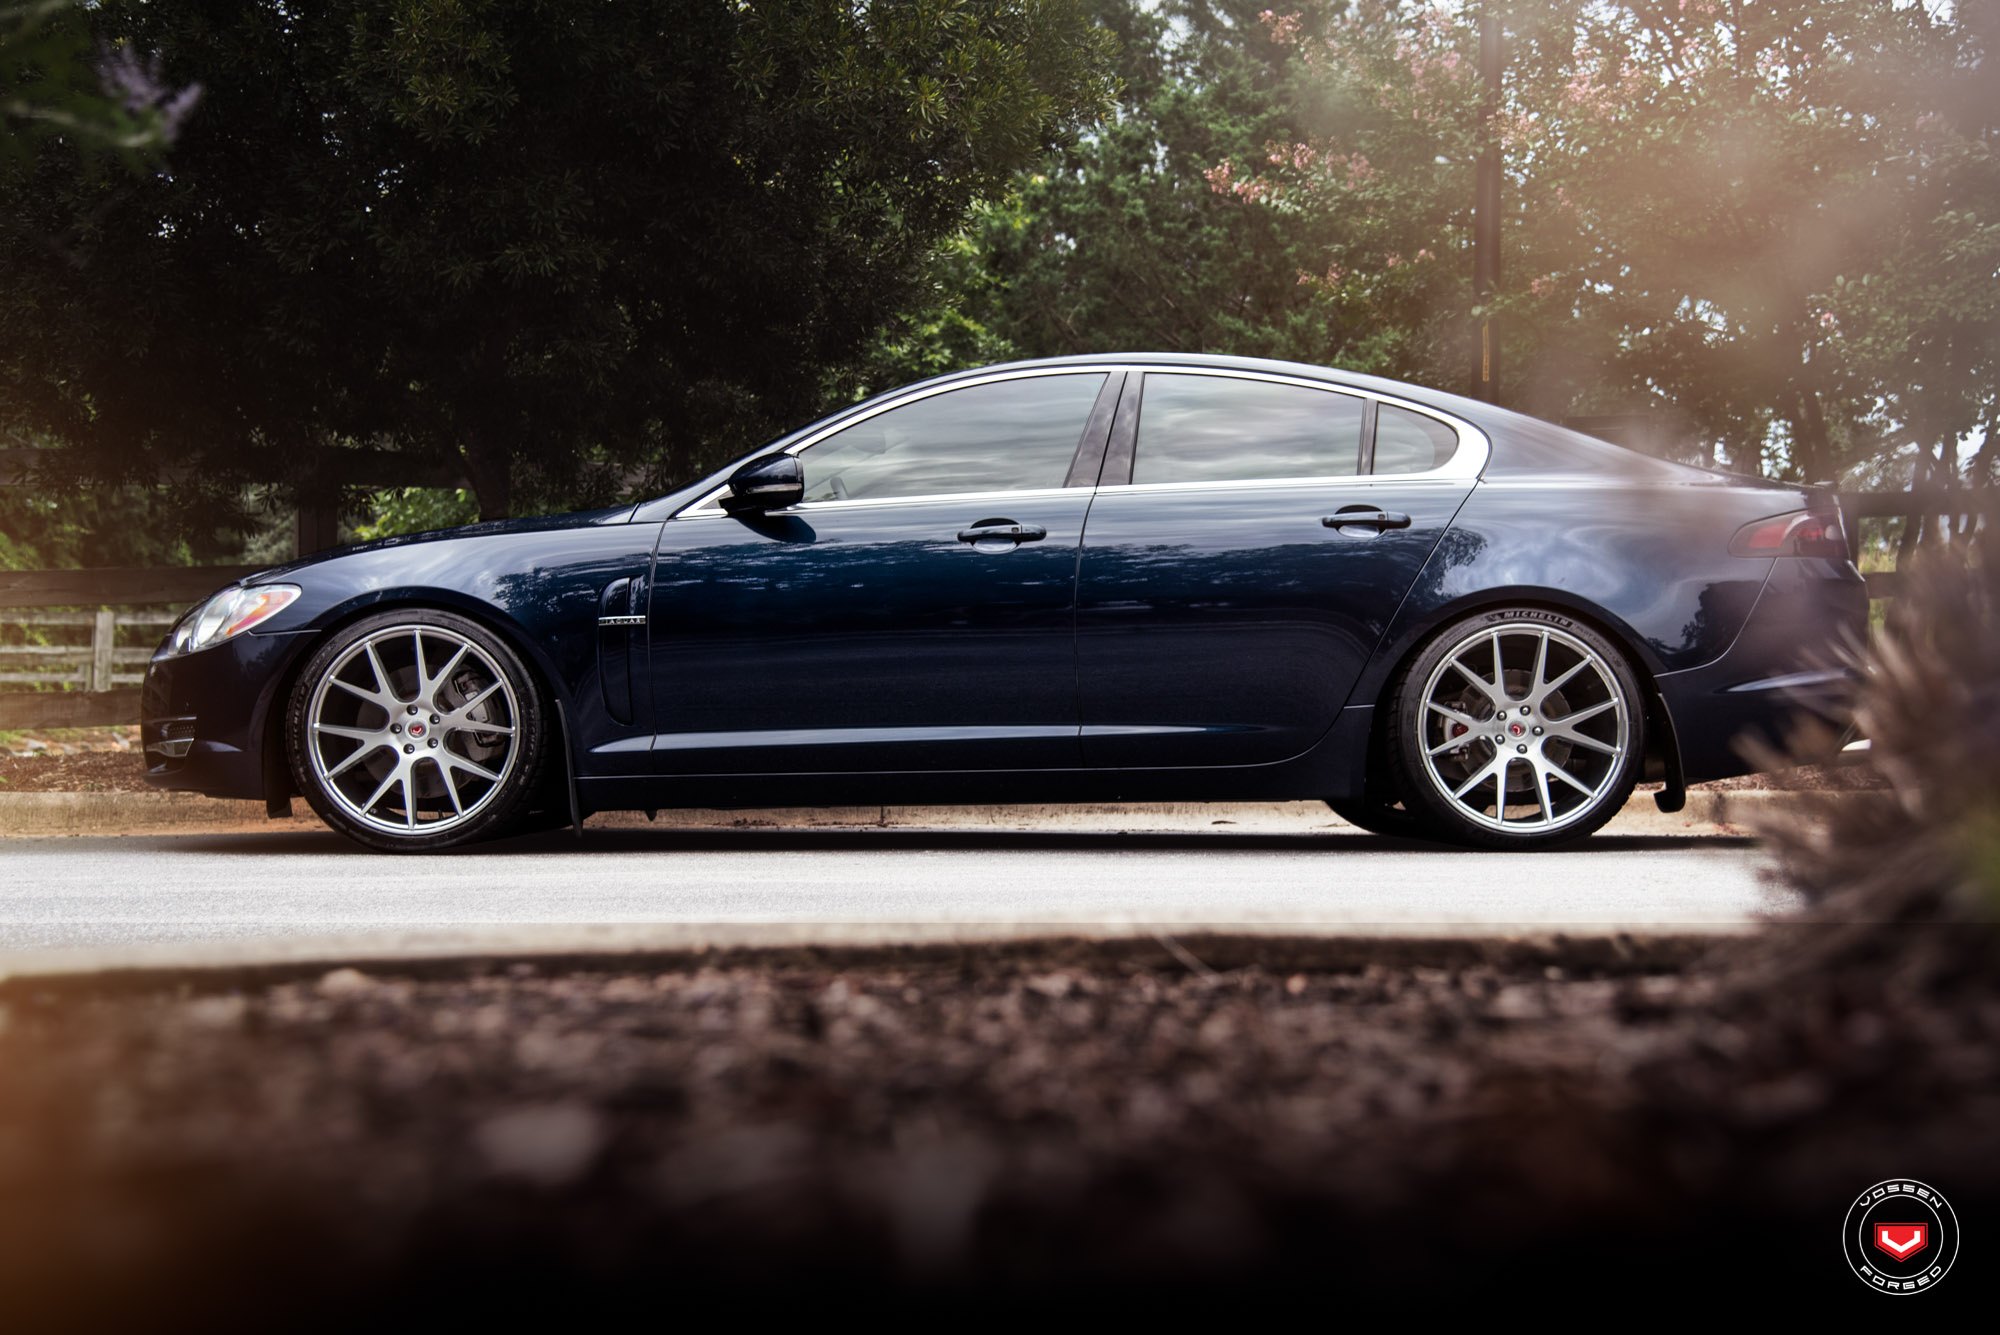 Custom Dark Blue Jaguar XF on Michelin Tires - Photo by Vossen